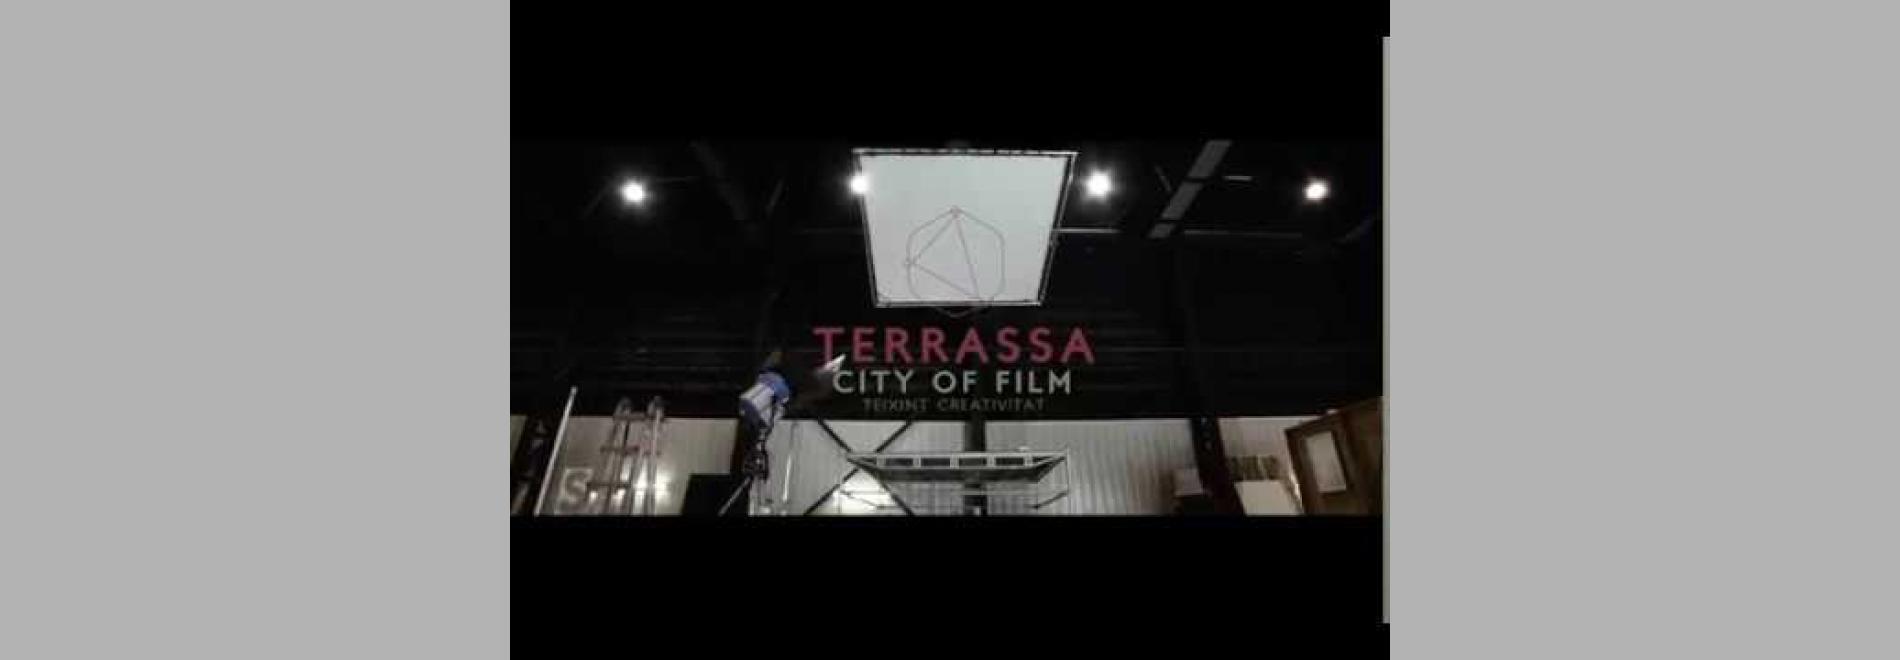 Terrassa, City of Film (Taula Audiovisual, 2017)